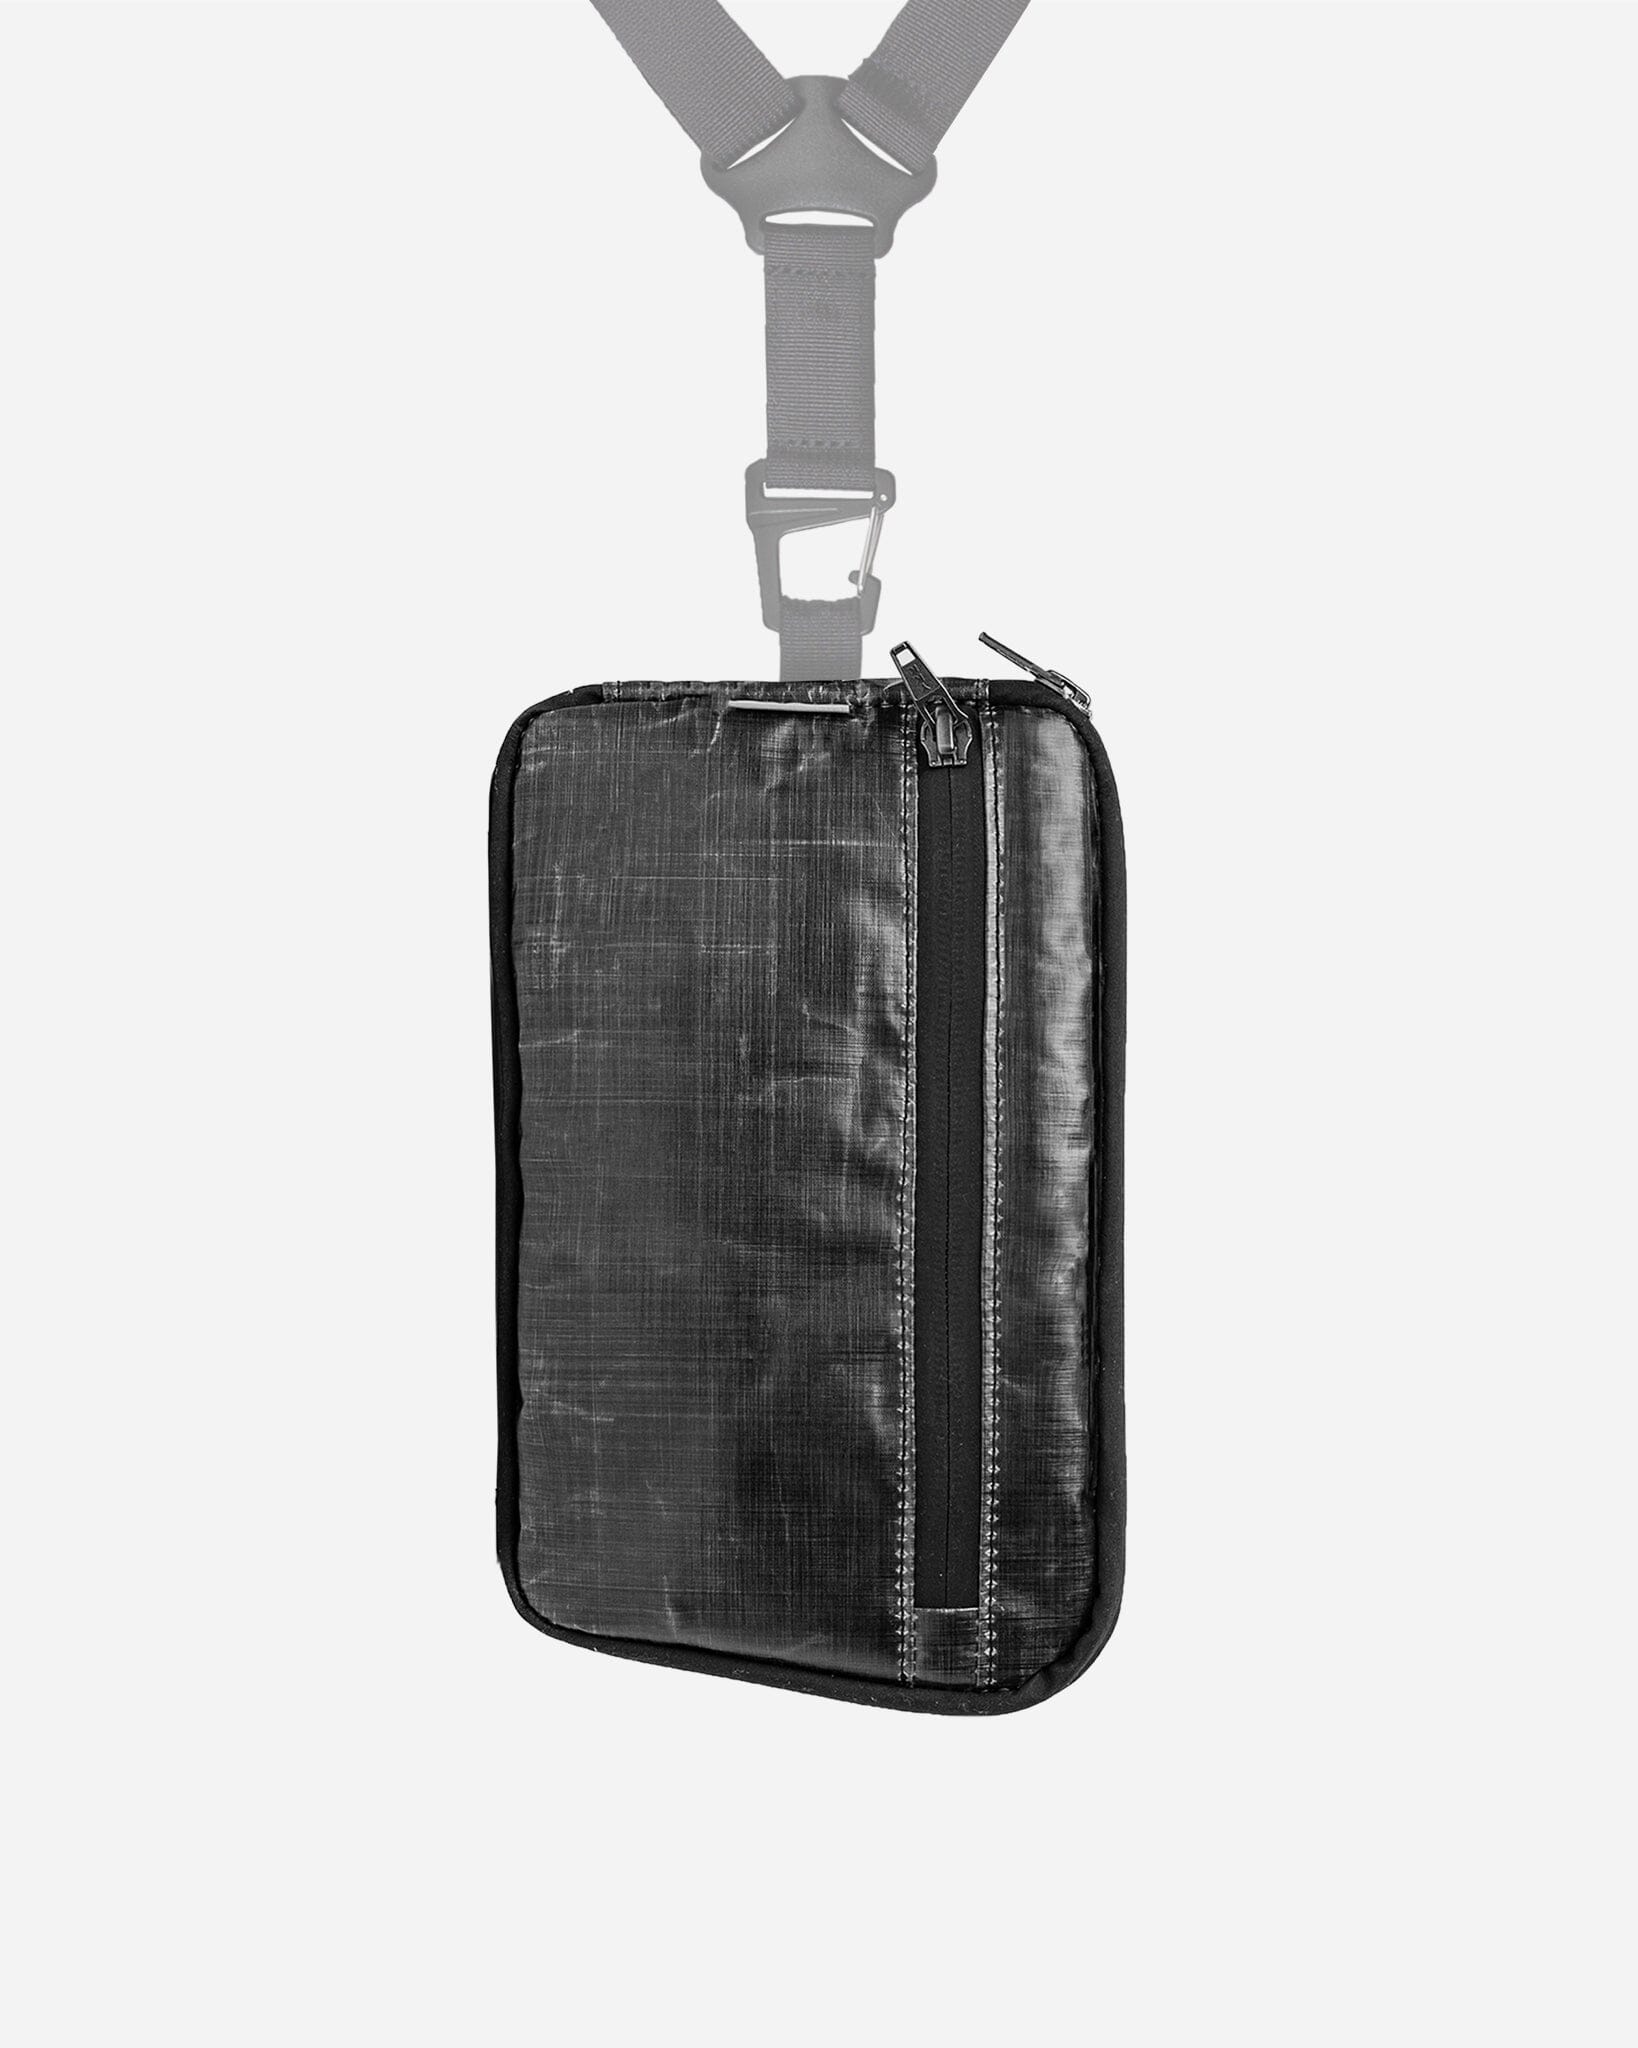 AUX™ Pocket - Black Dyneema Bag bolstr   